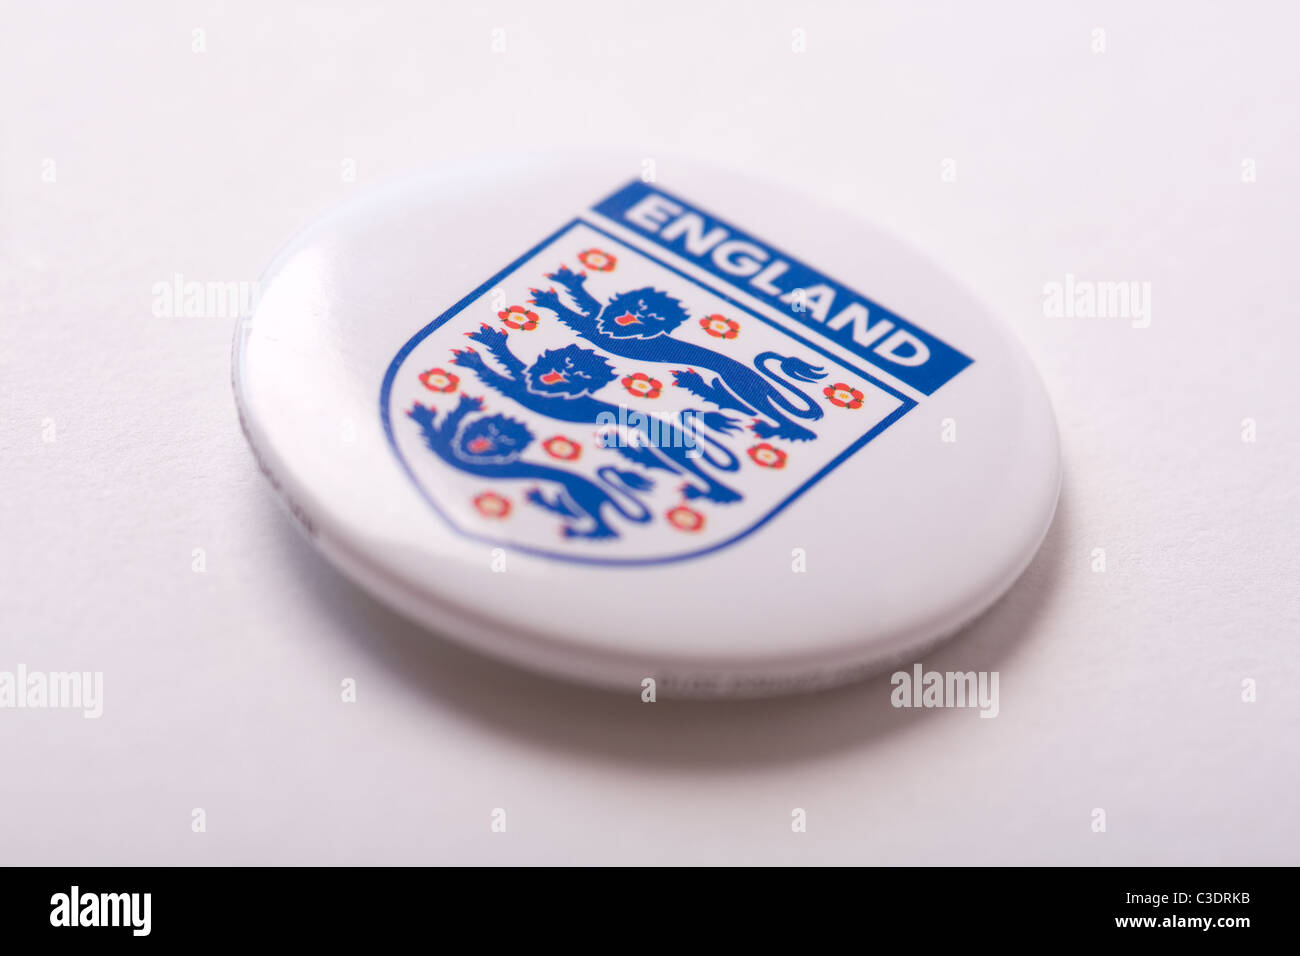 Angleterre Football Fan de badge Banque D'Images